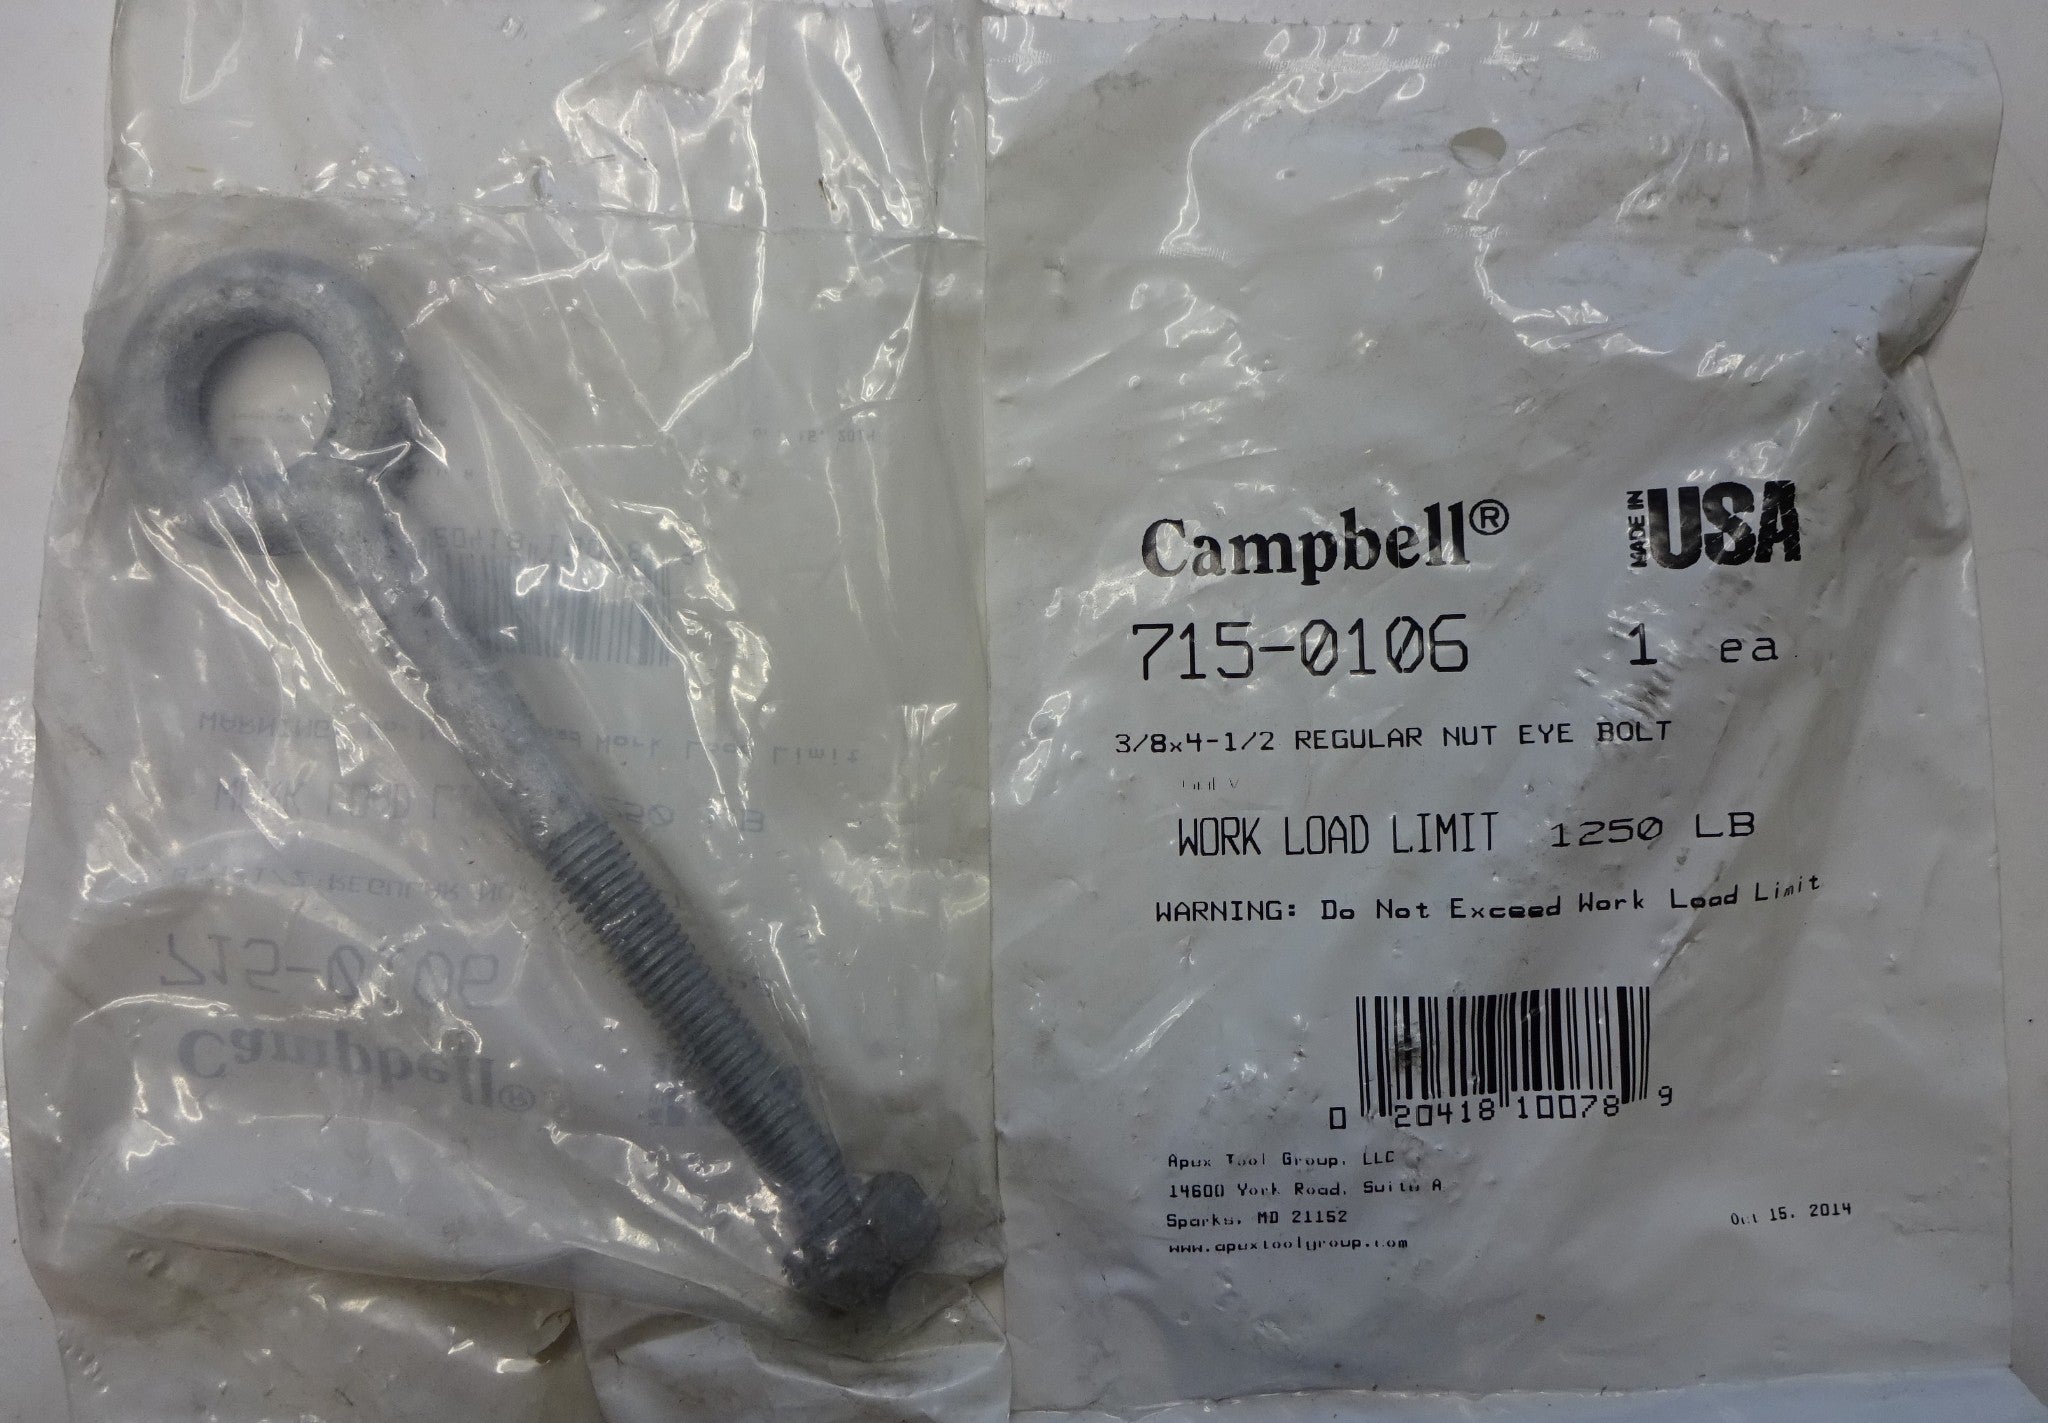 Campbell 715-0106 Nut Eye Bolt 3/8" X 4-1/2" Galvanized Steel 1250lb USA 2pcs.